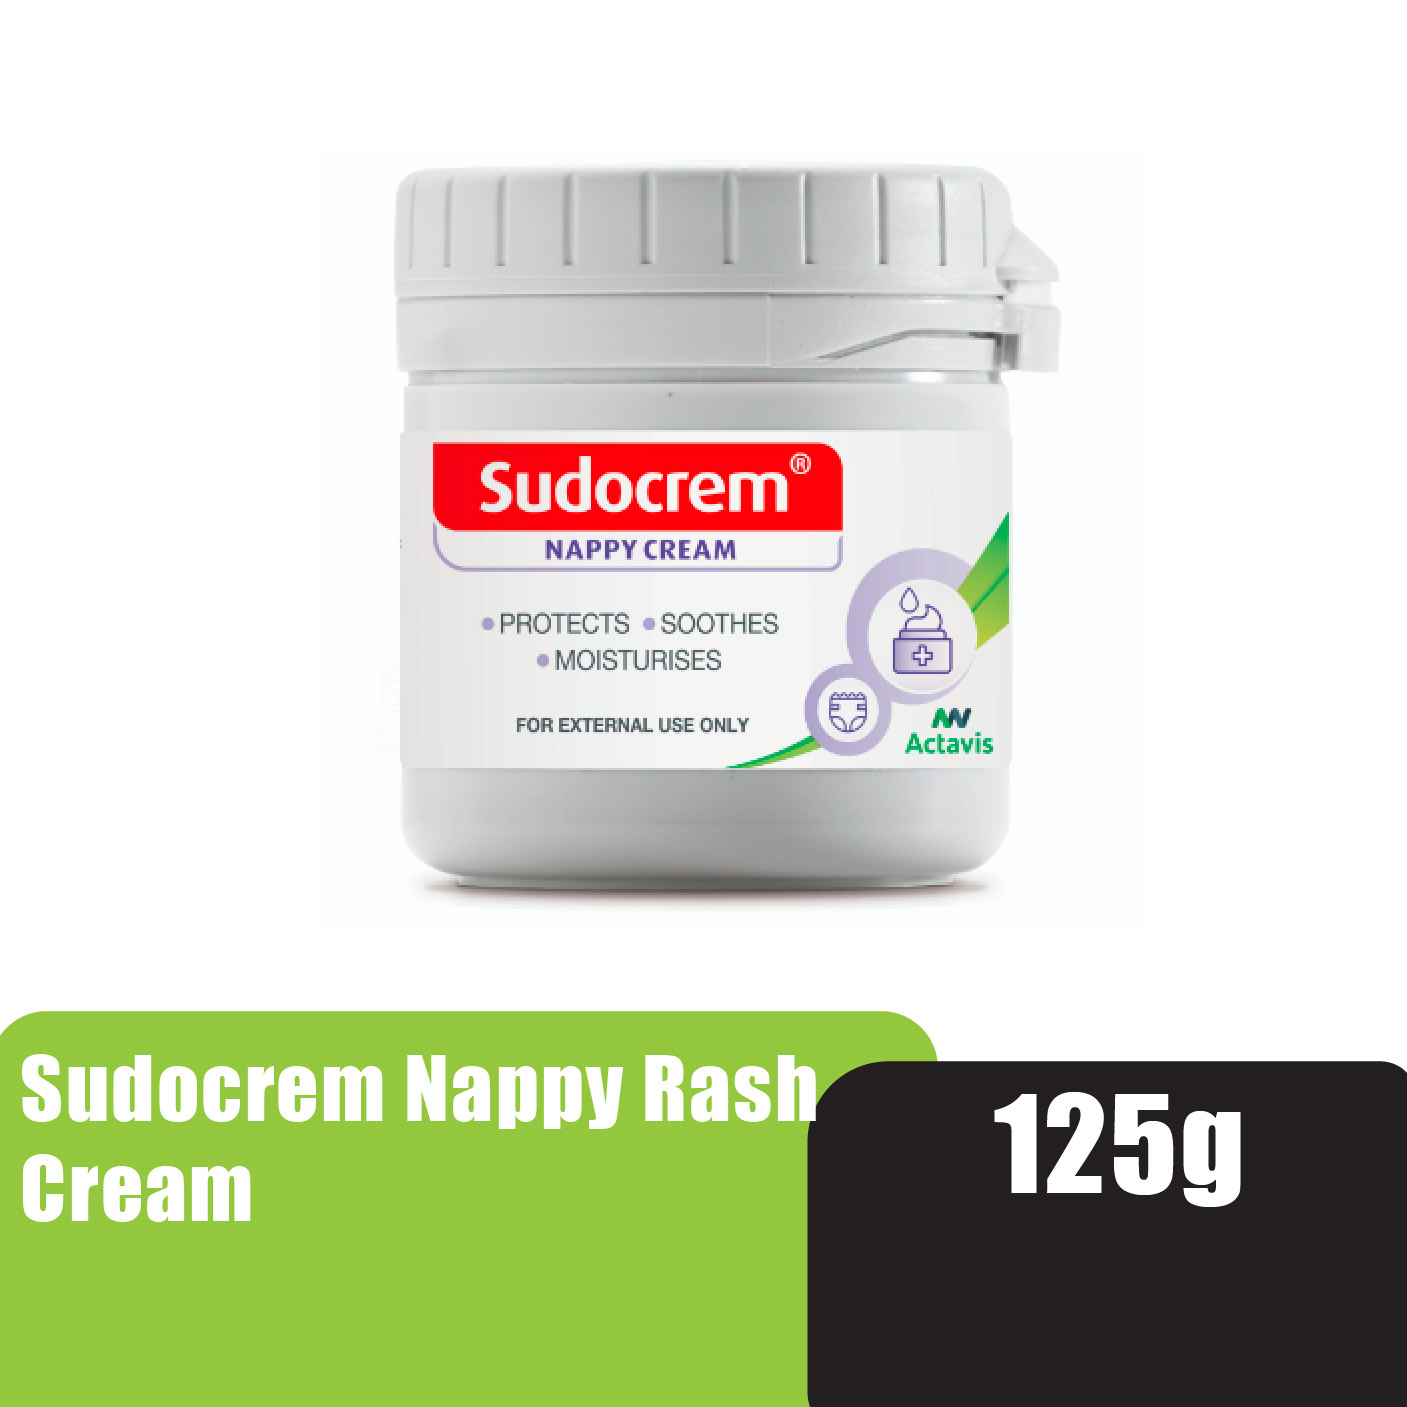 SUDOCREM Nappy Rash Cream 120g - Sudocream Nappy Cream / Krim Antiseptic / Nappy Cream